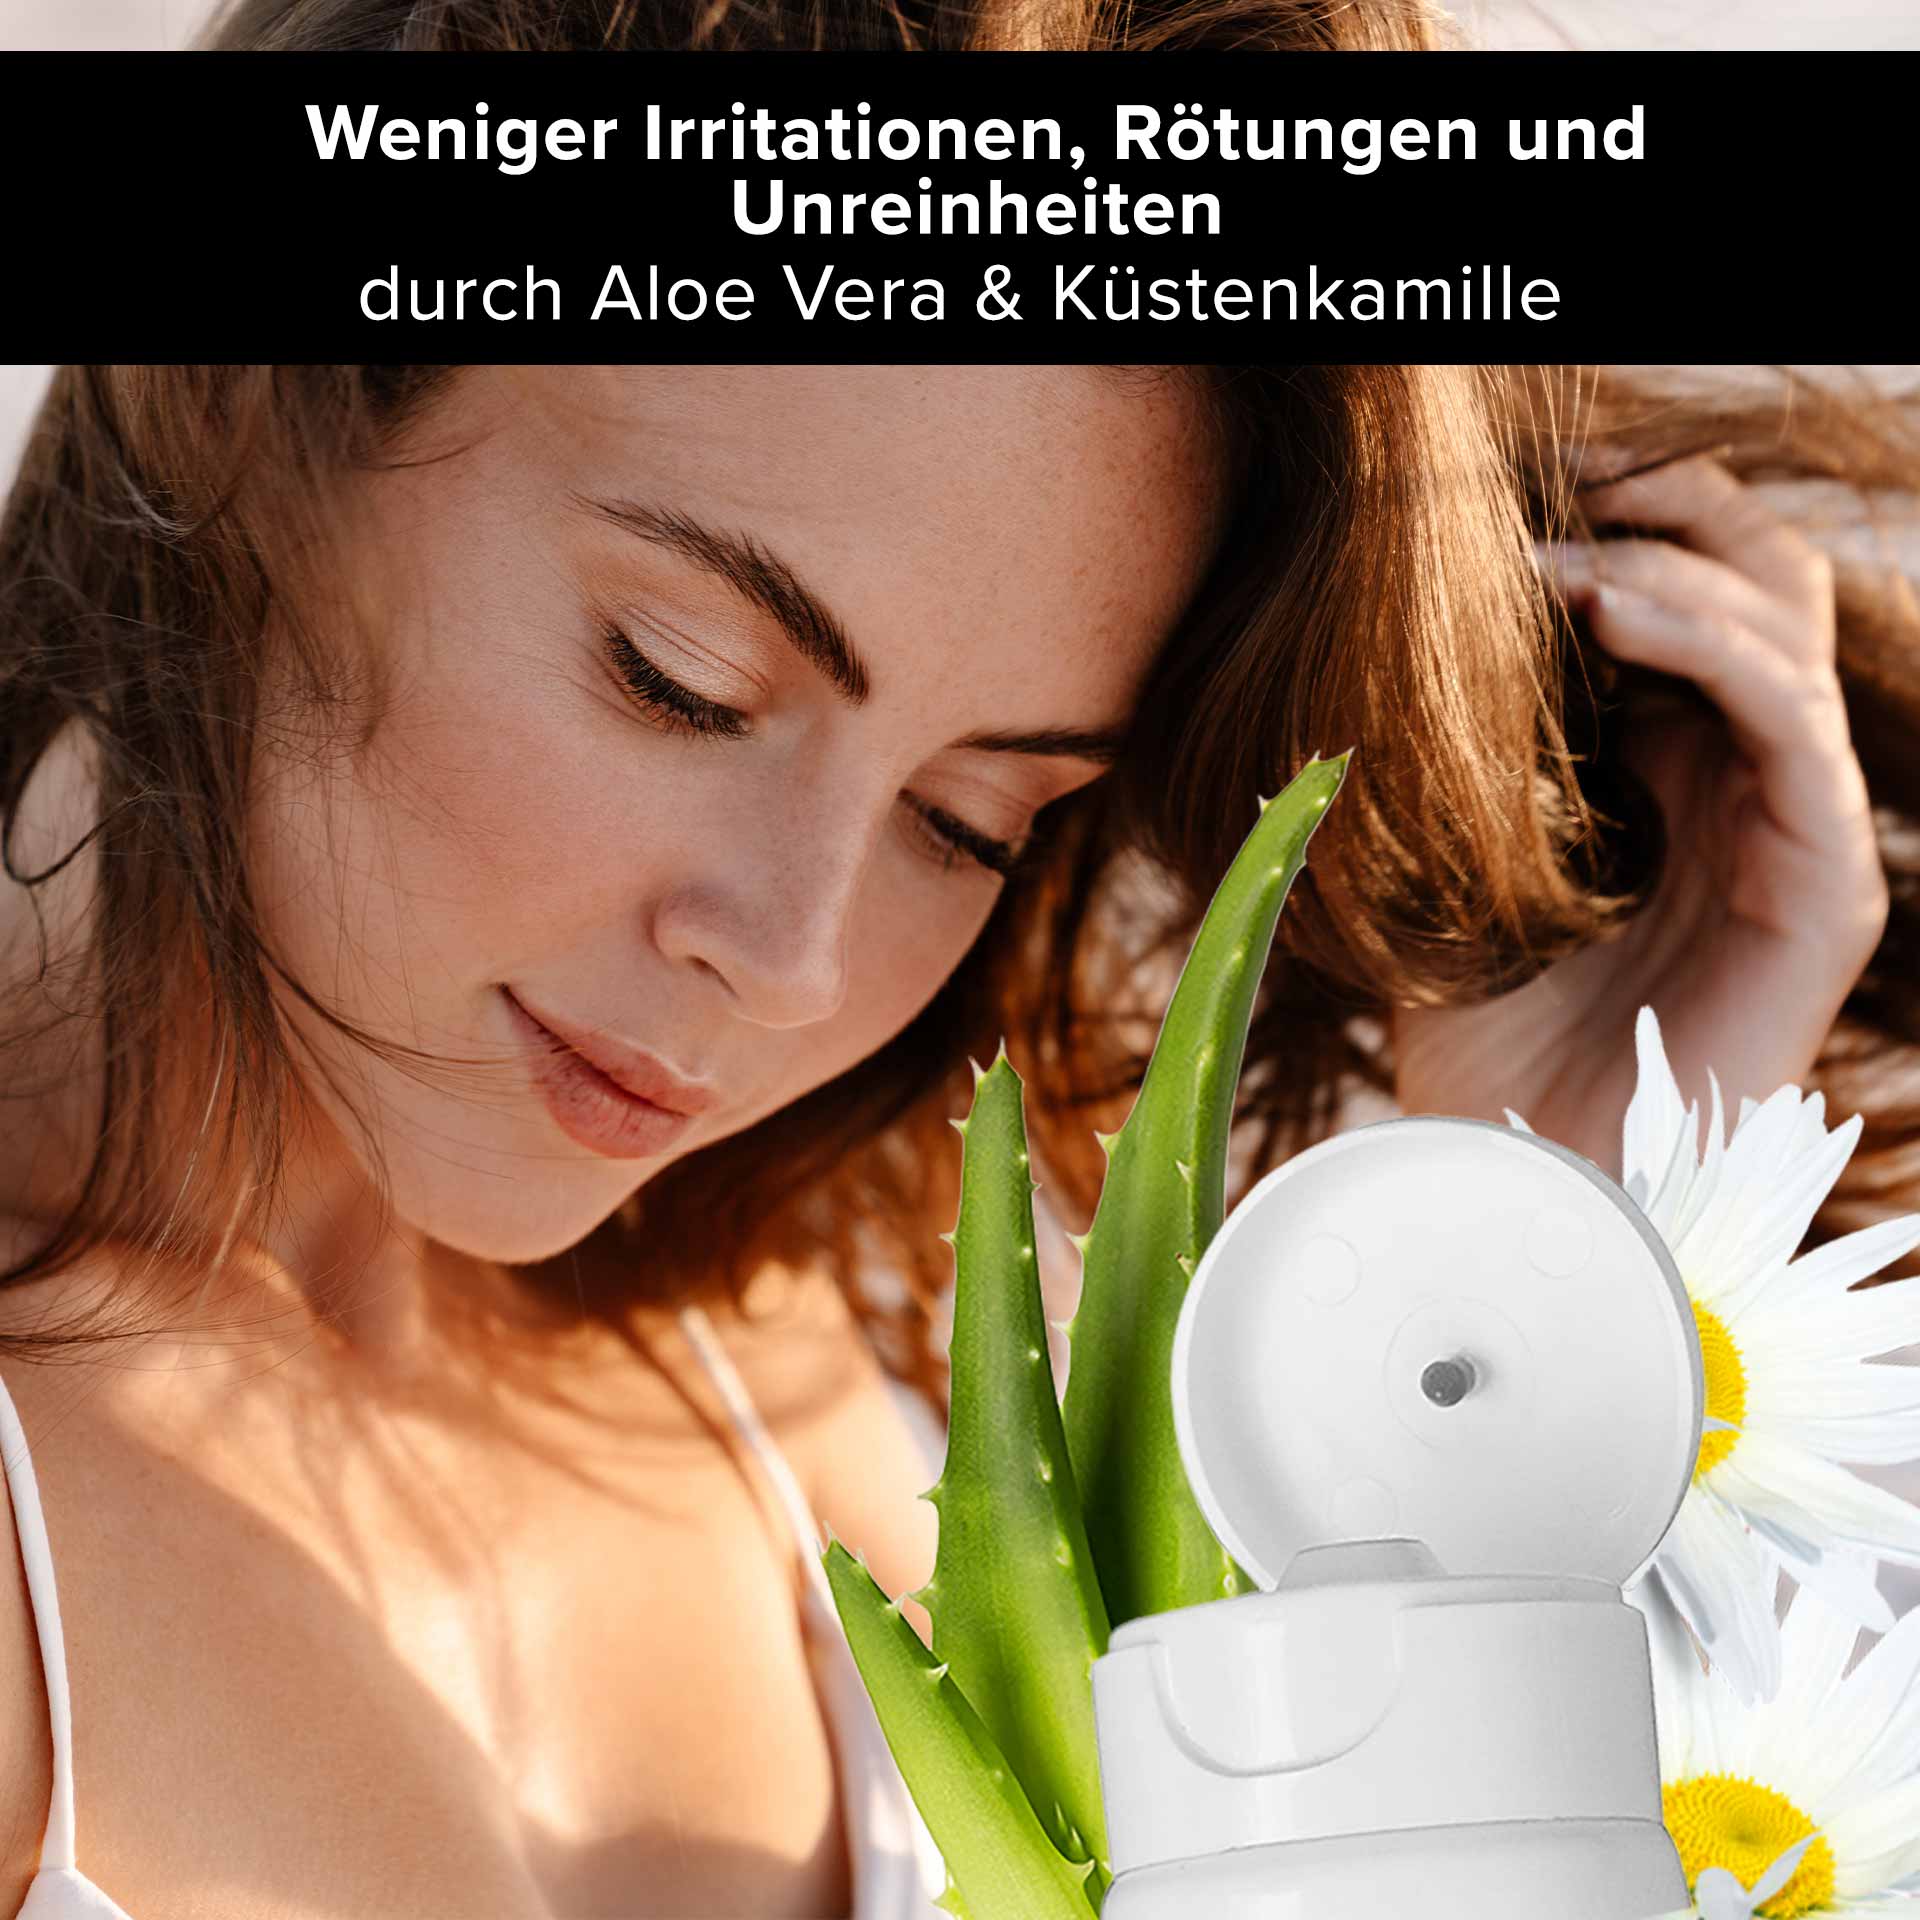 Aloe Vera Face &amp; Body Moisturizer with Ectoin® 75 ml